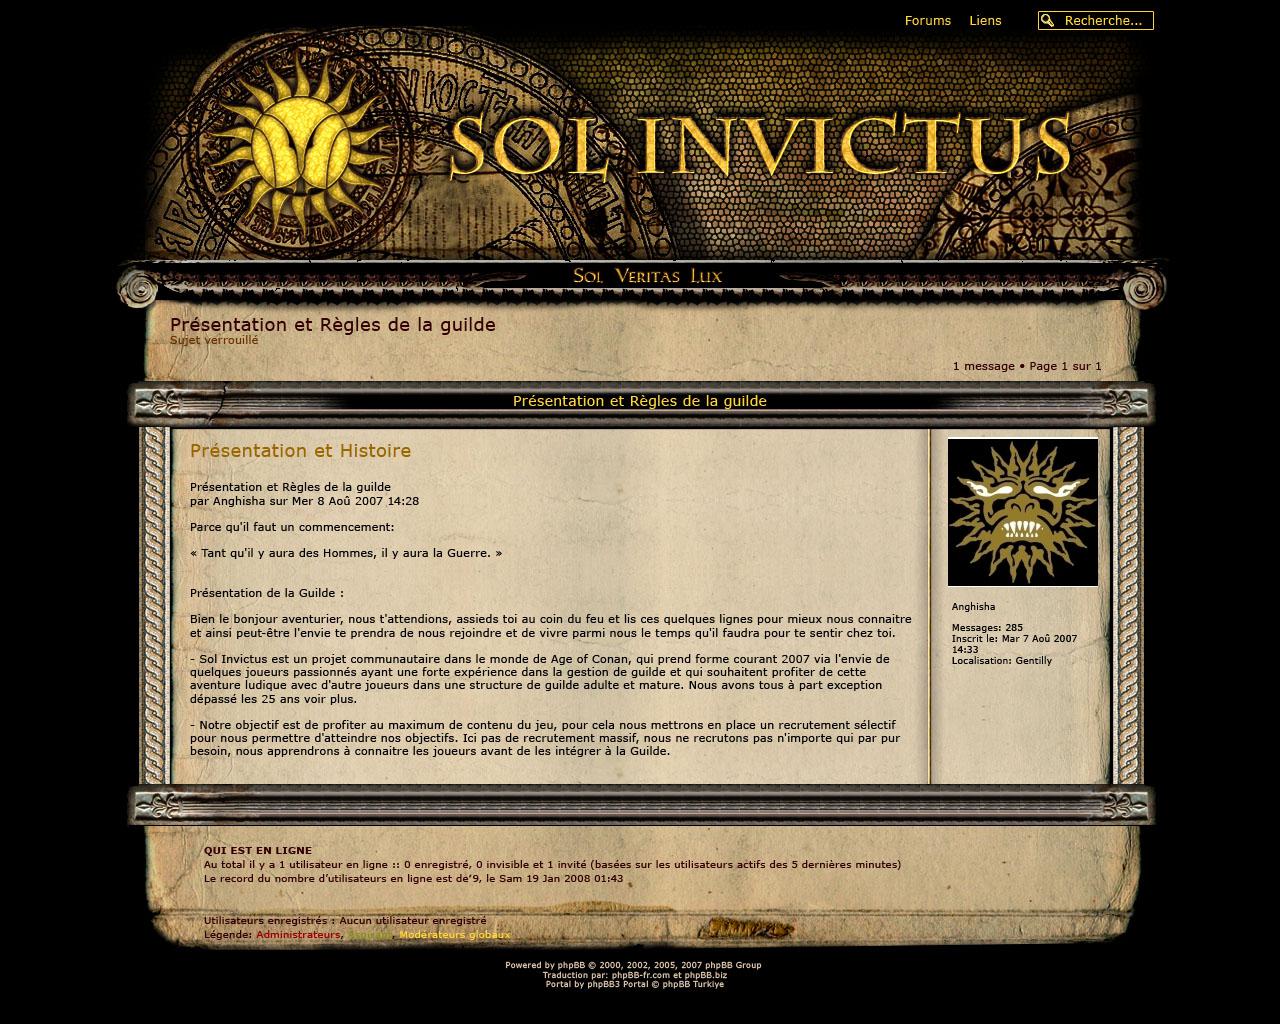 Sol Invictus - Site de Guilde E-sport gaming - Forum post